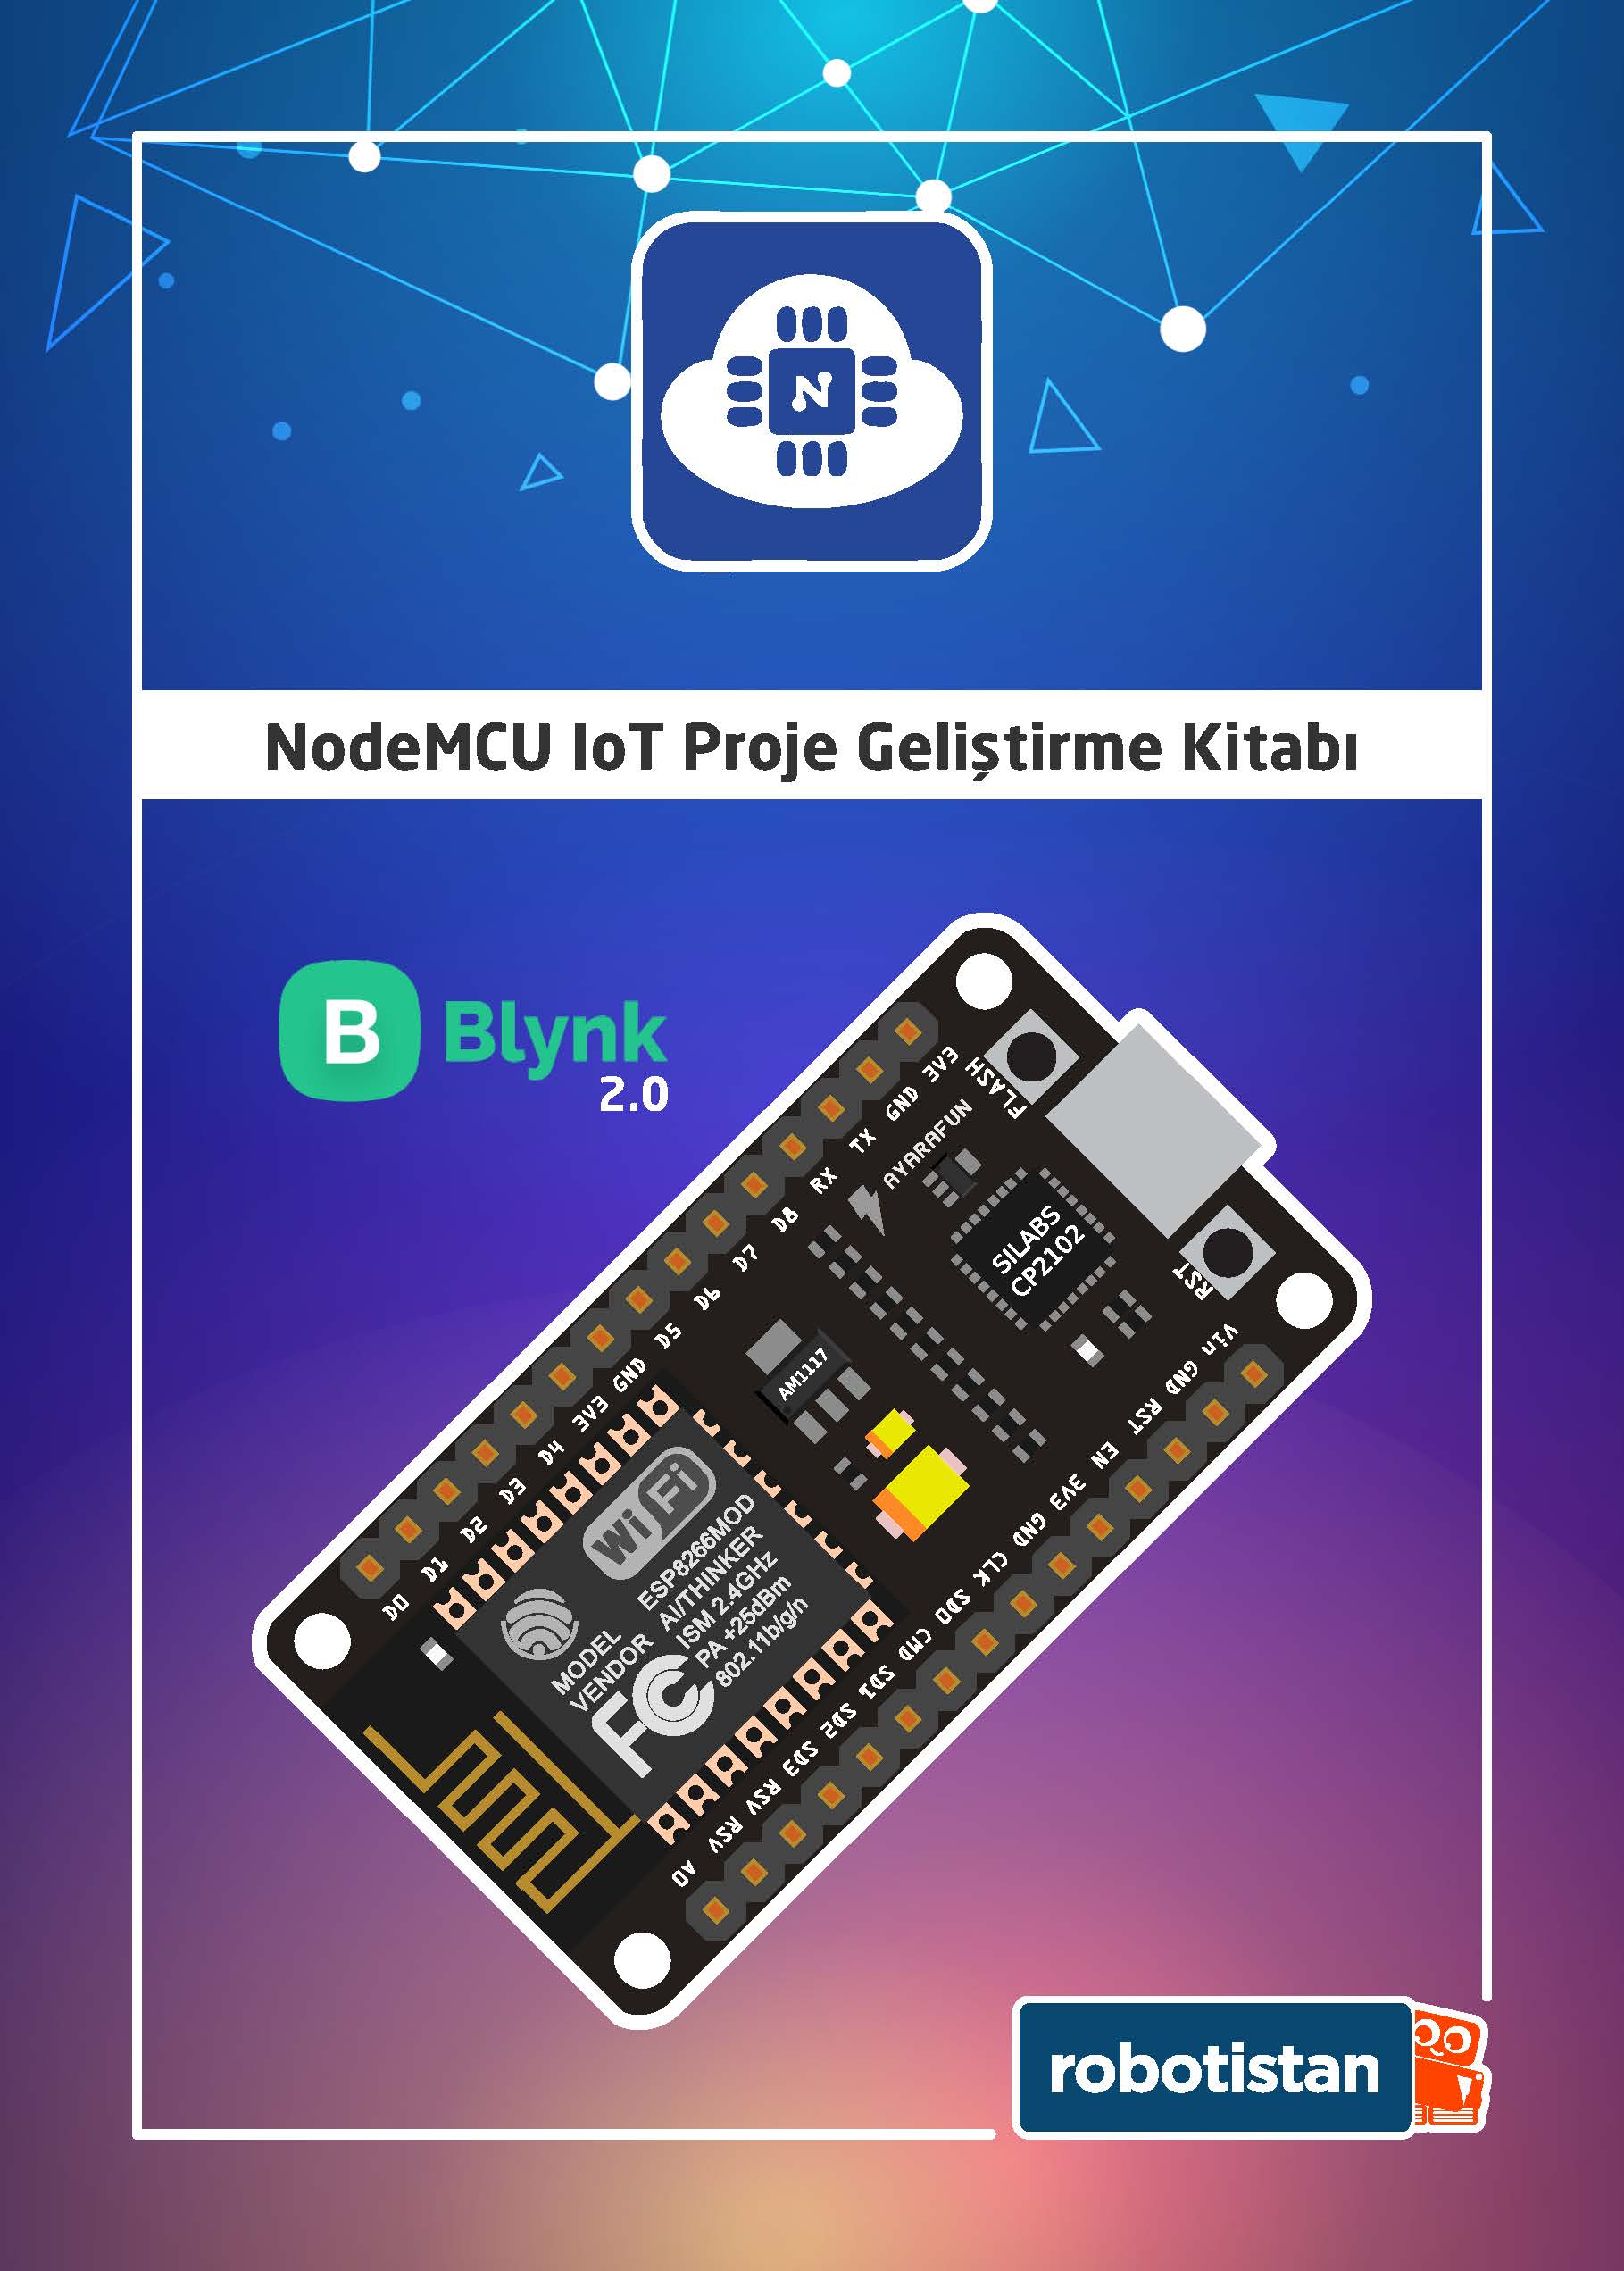 DIY Automated Home Gadgets Smart Electronic IoT Projects Robotistan Nodemcu ESP8266 IoT Starter Kit Nodemcu Kit IoT WiFi Development 